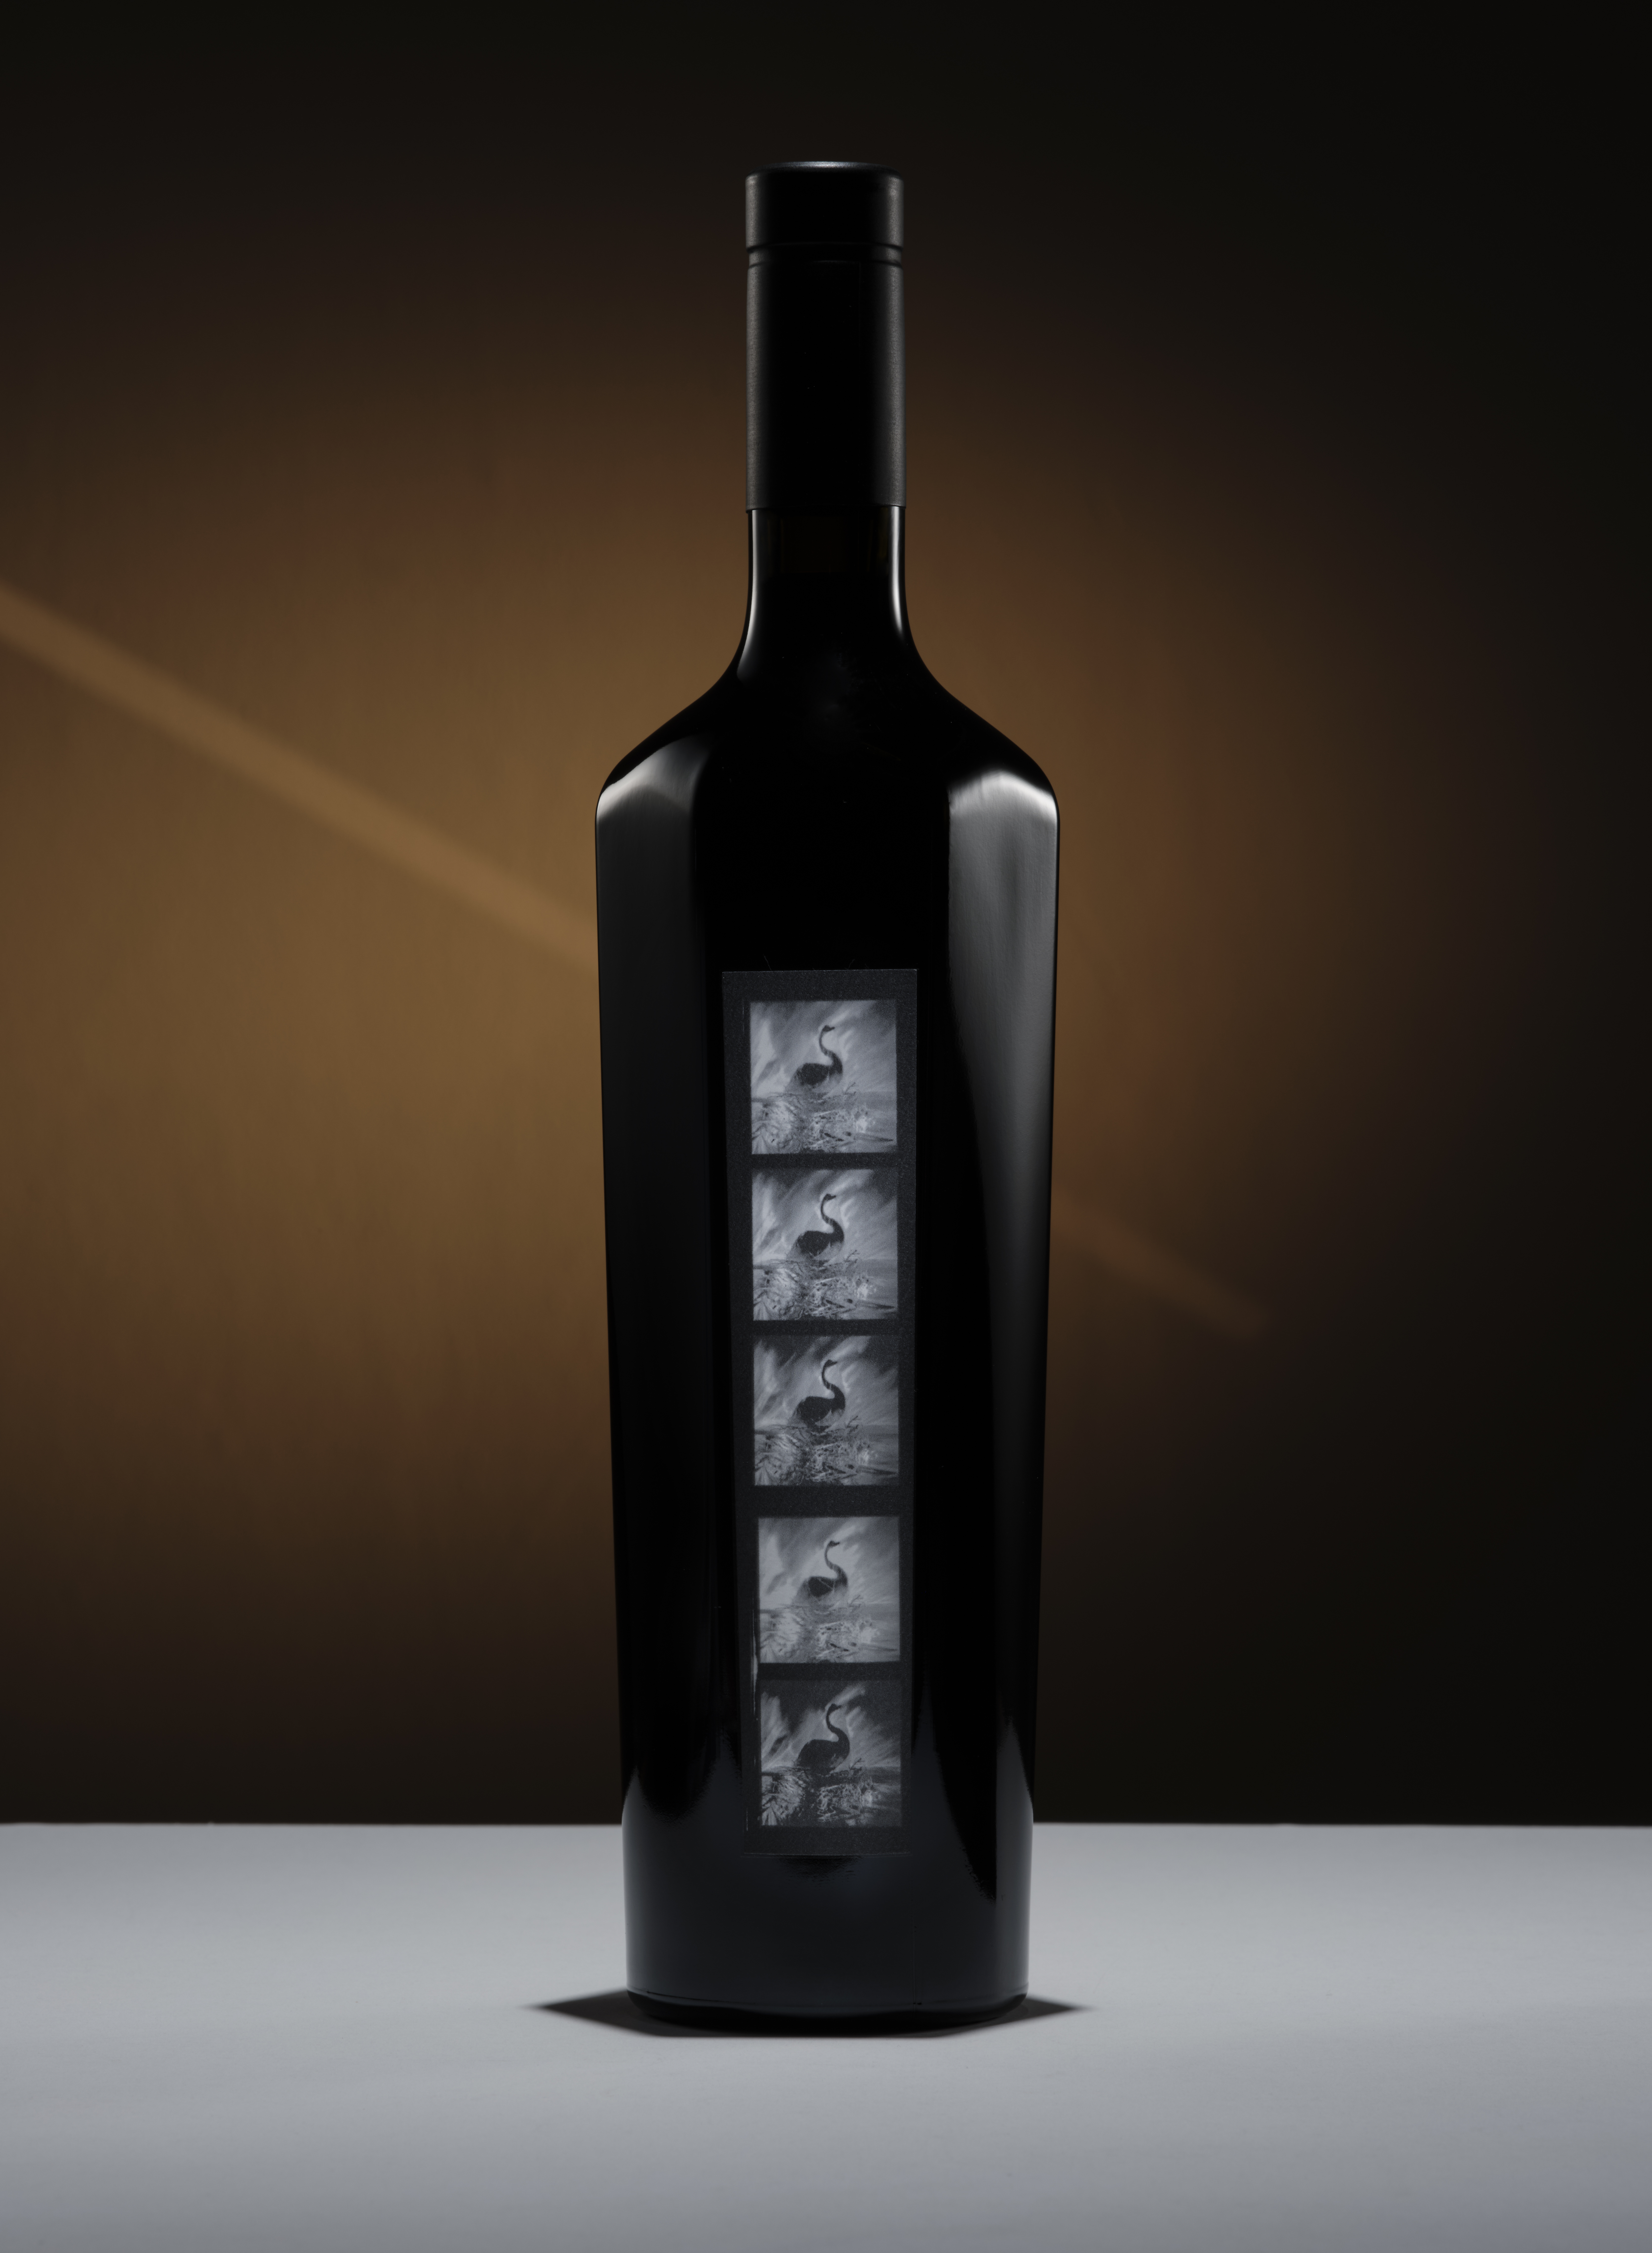 Sensoria Intrigue labeled bottle